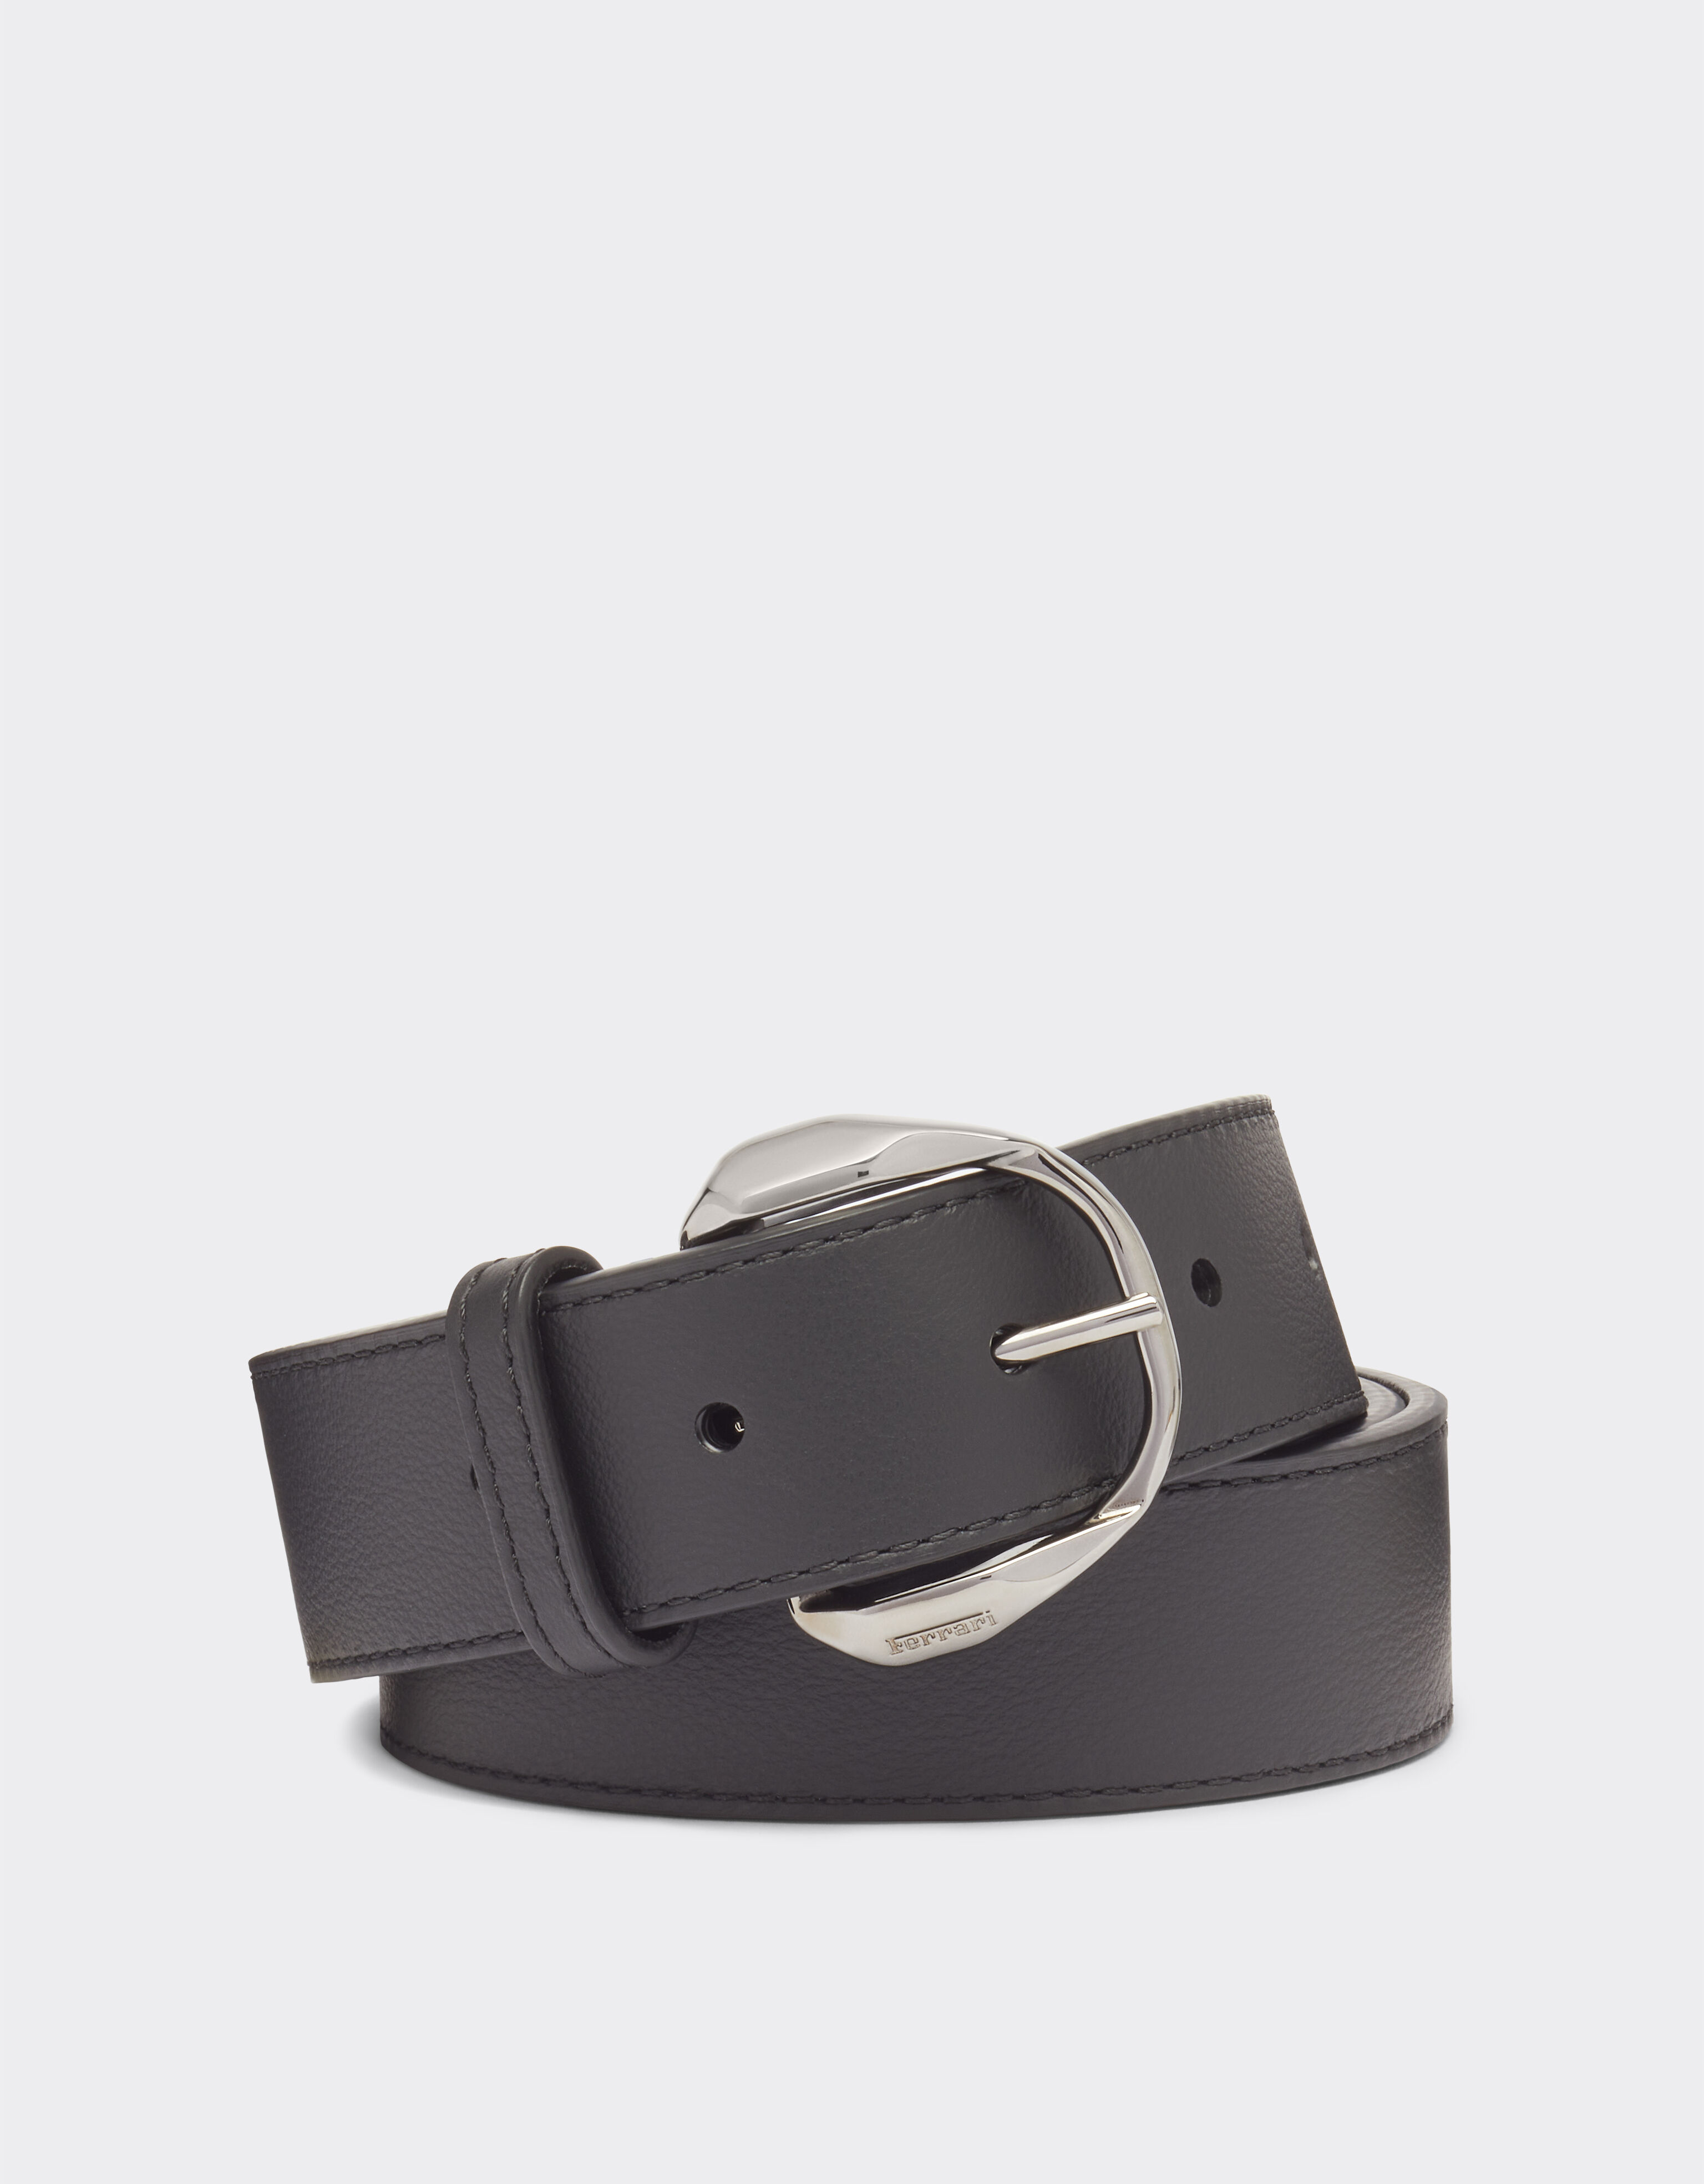 Ferrari Leather belt with Prancing Horse detail Black 20673f